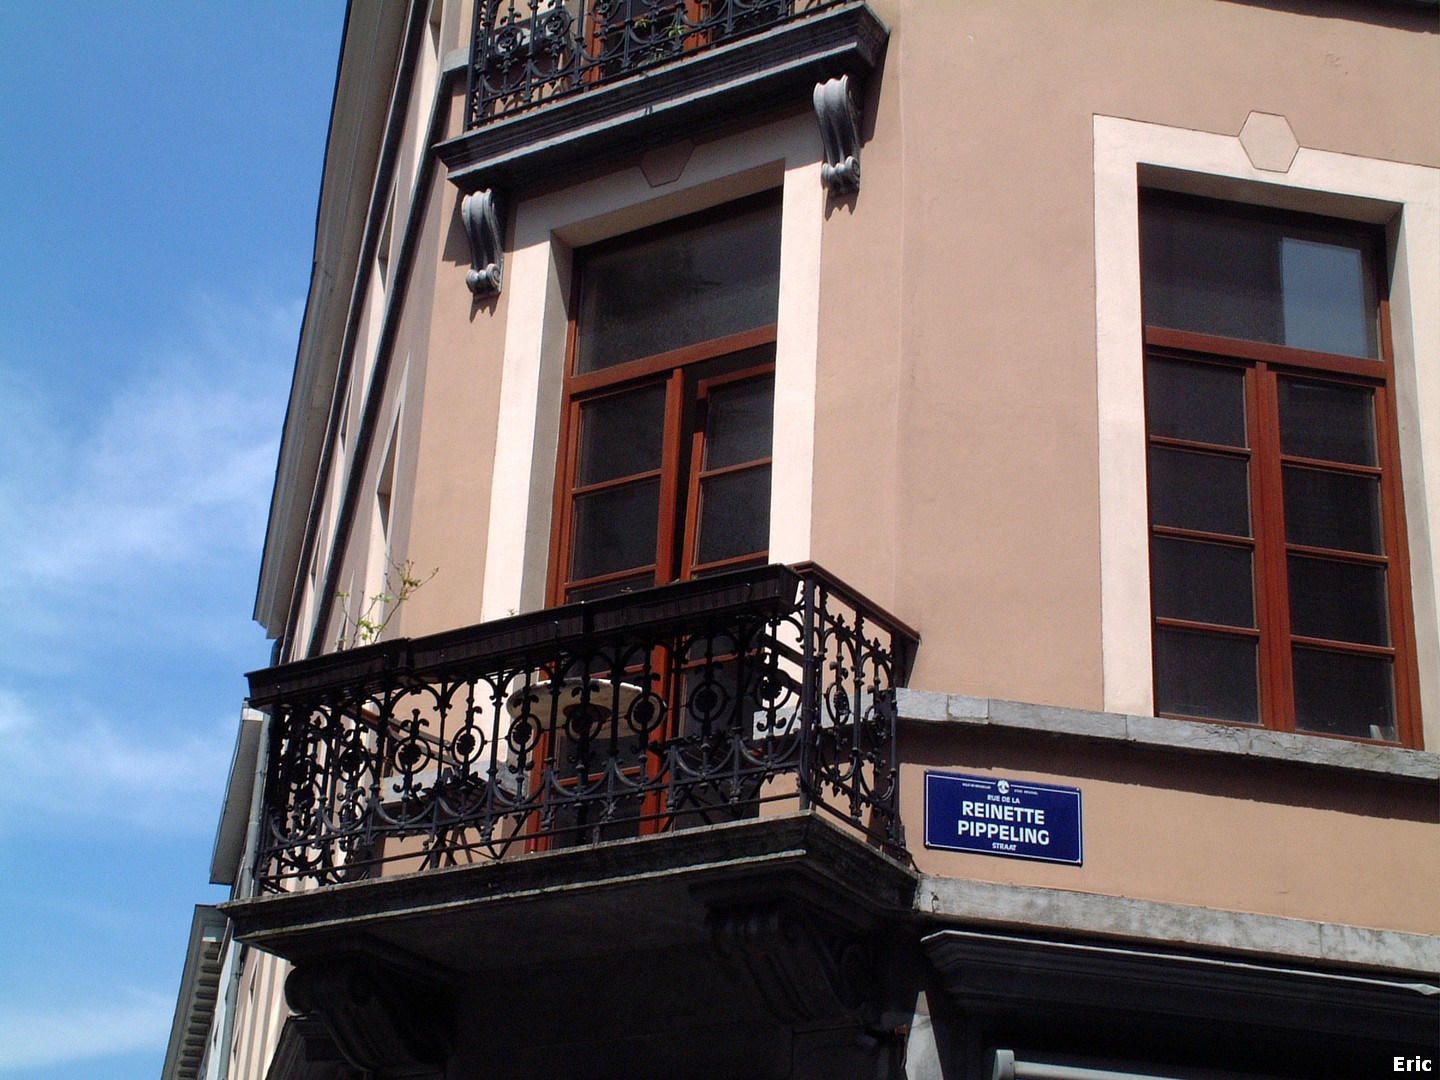 Rue de la Reinette